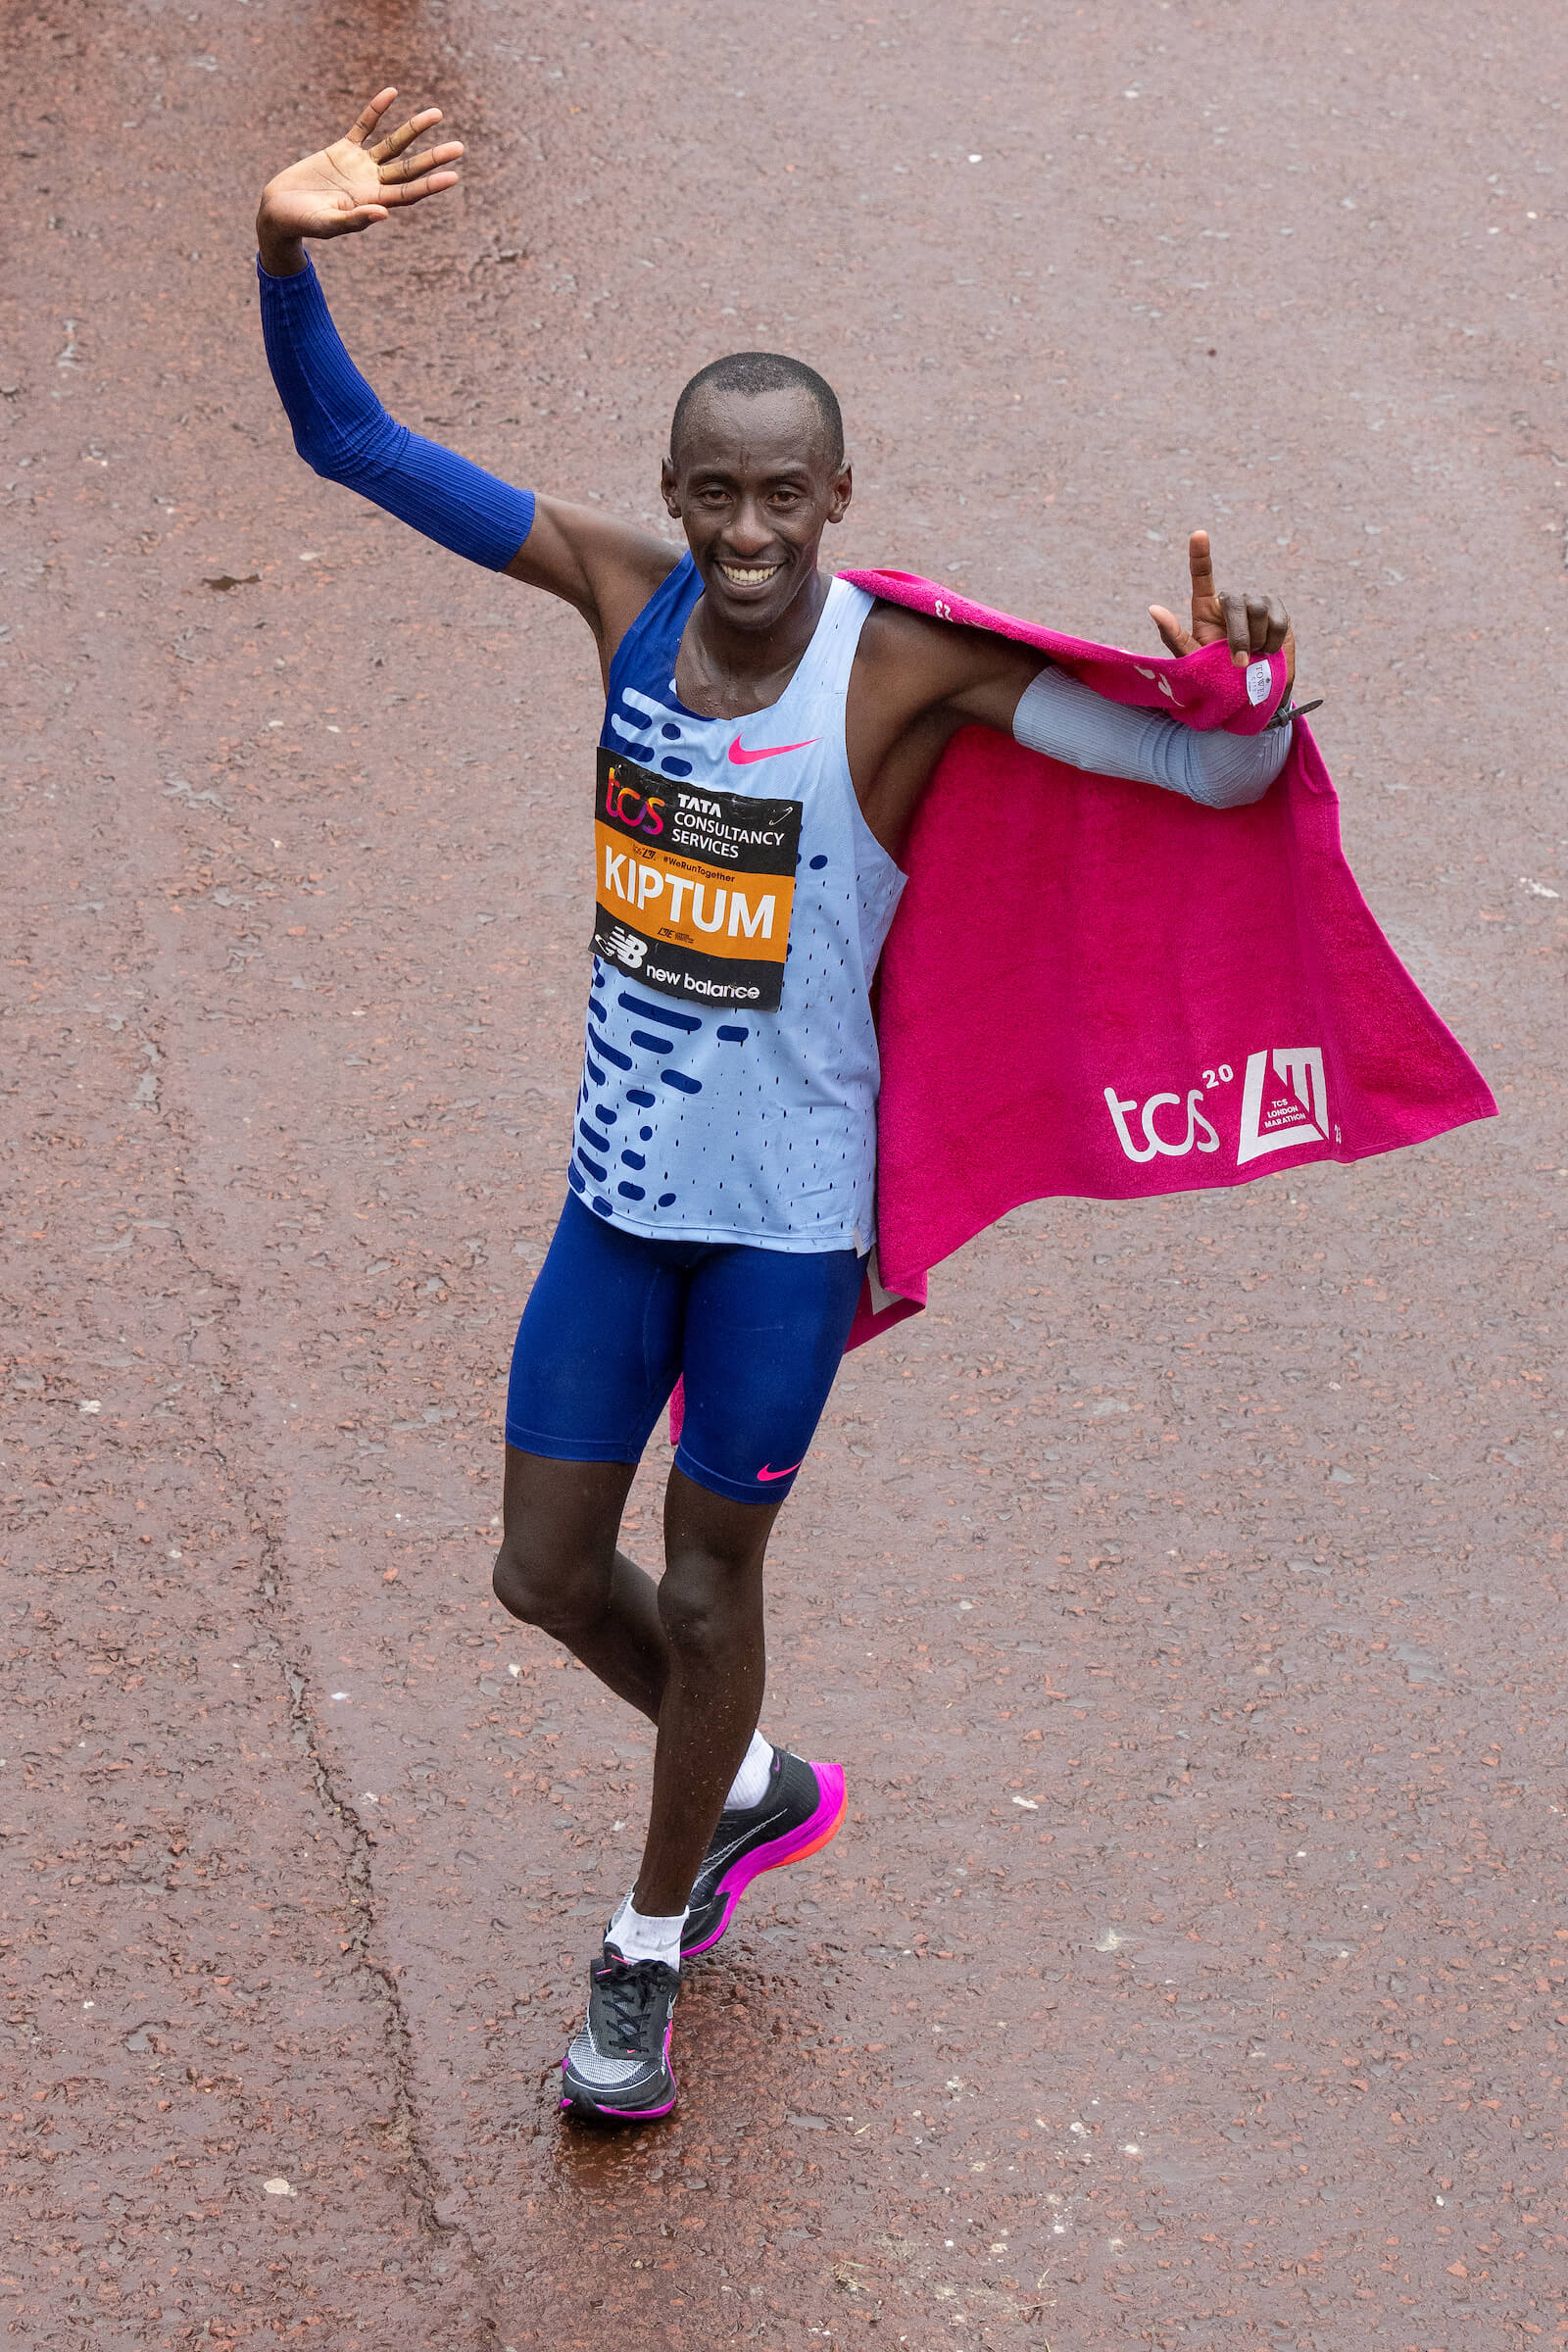 Kelvin Kiptum smiles and waves after winning the TCS London Marathon